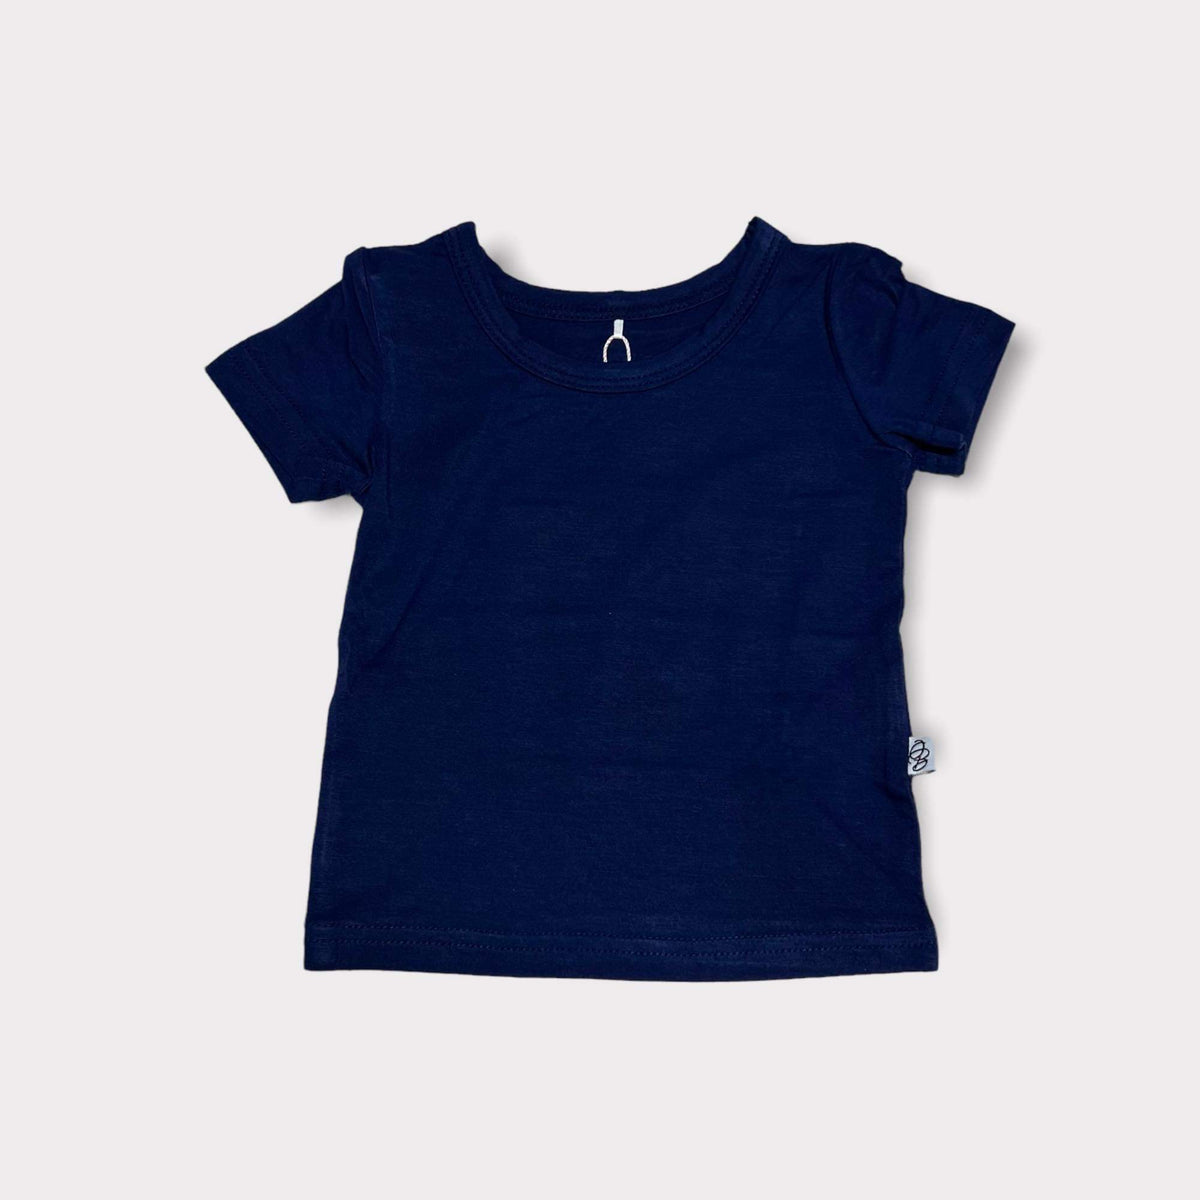 Navy Child T-Shirt - FINAL SALE